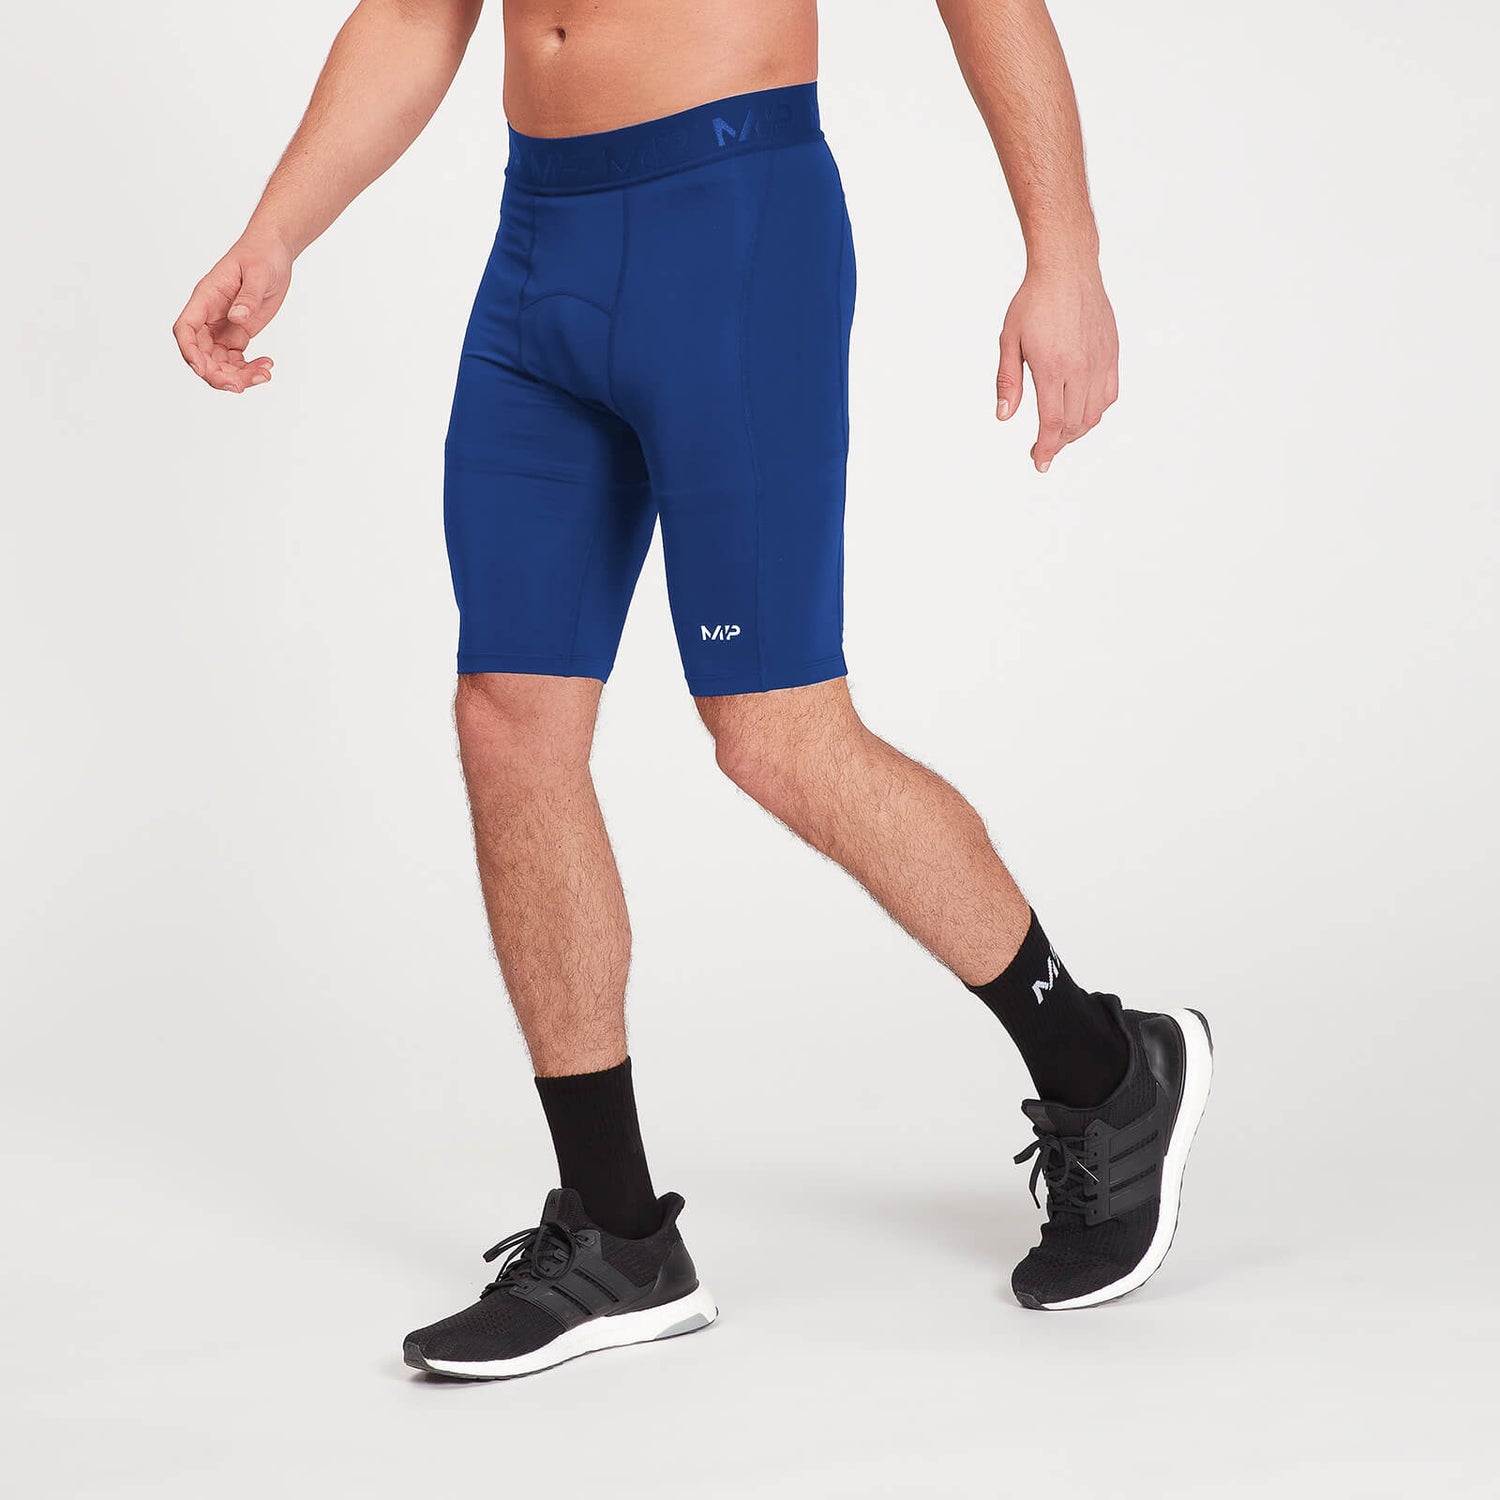 MP Men's Training Baselayer Shorts - Intense Blue - S